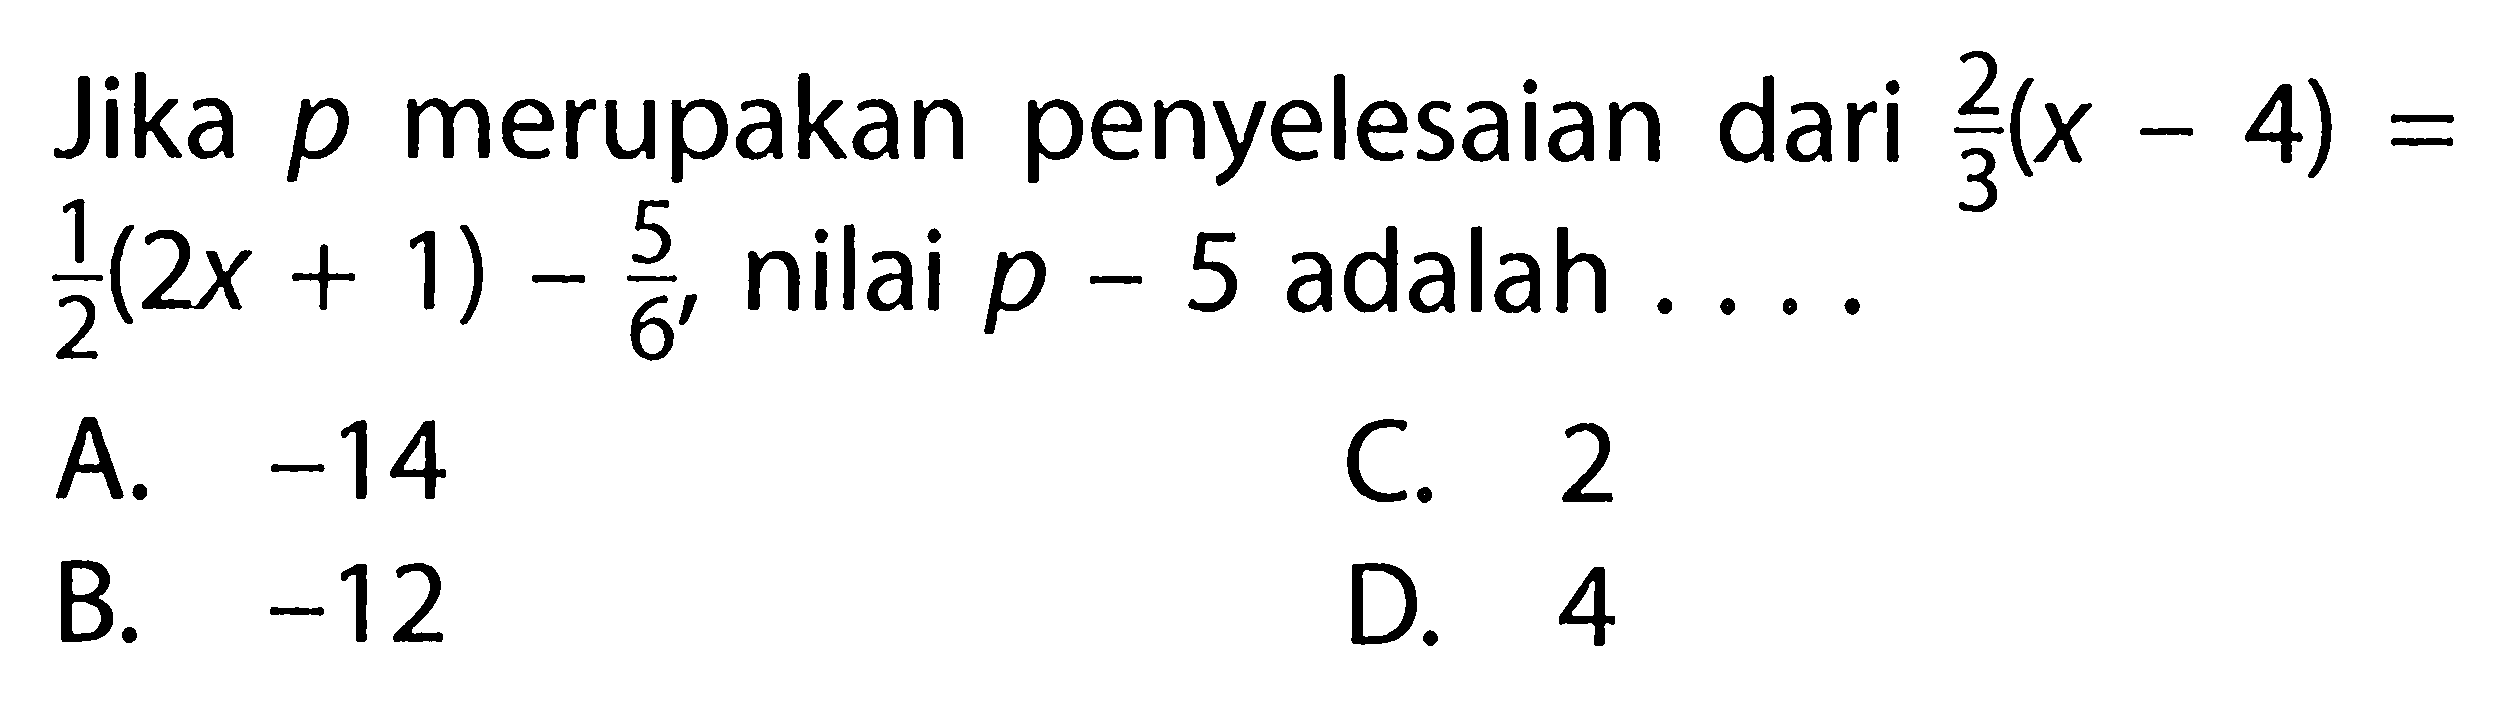 Jika p merupakan penyelesaian dari 2/3 (x - 4) = 1/2 (2x + 1) - 5/6, nilai p - 5 adalah ...